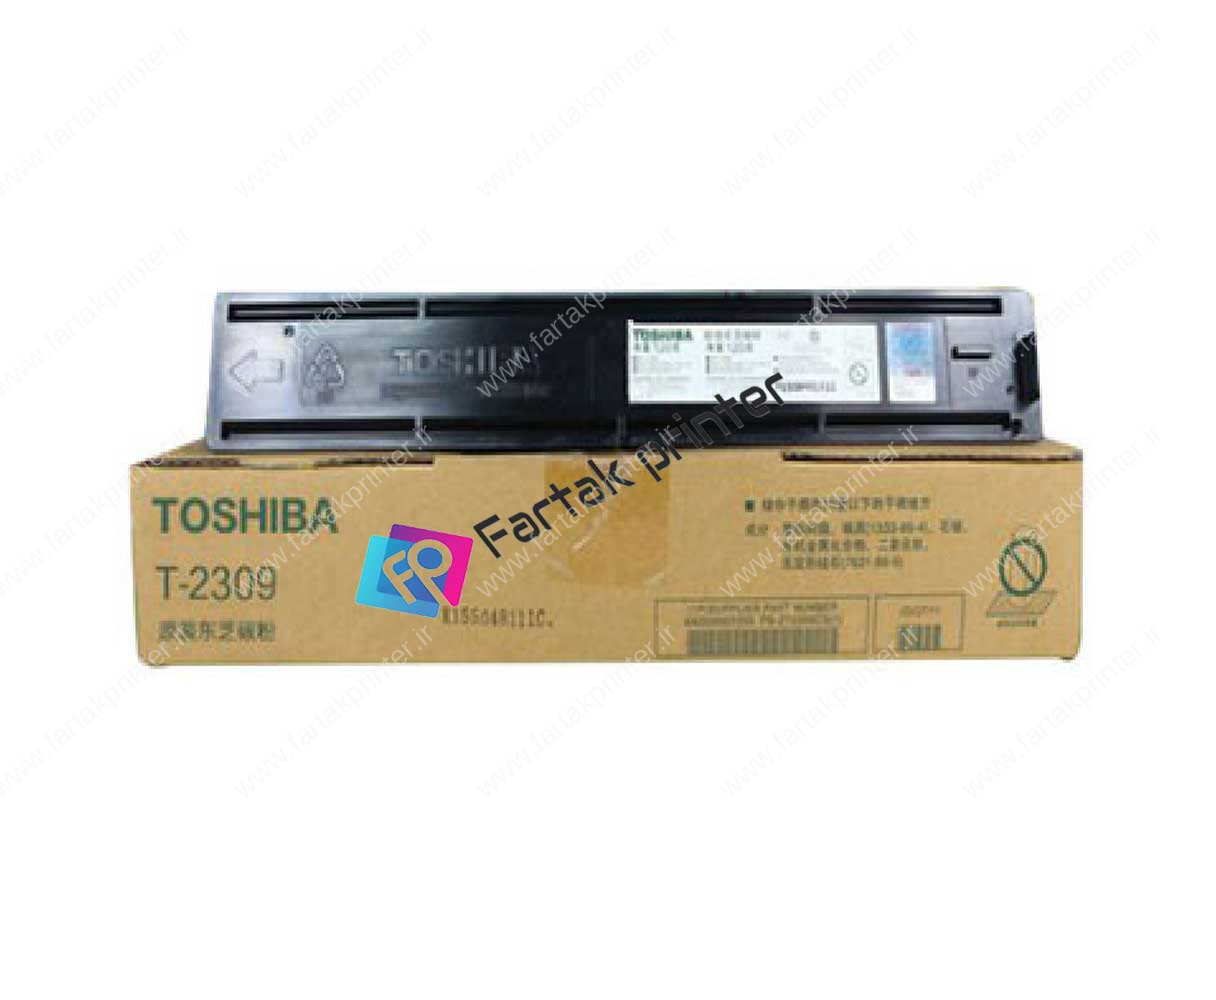 تونر کارتریج لیزری توشیبا Toshiba T-2309 فابریک و طرح